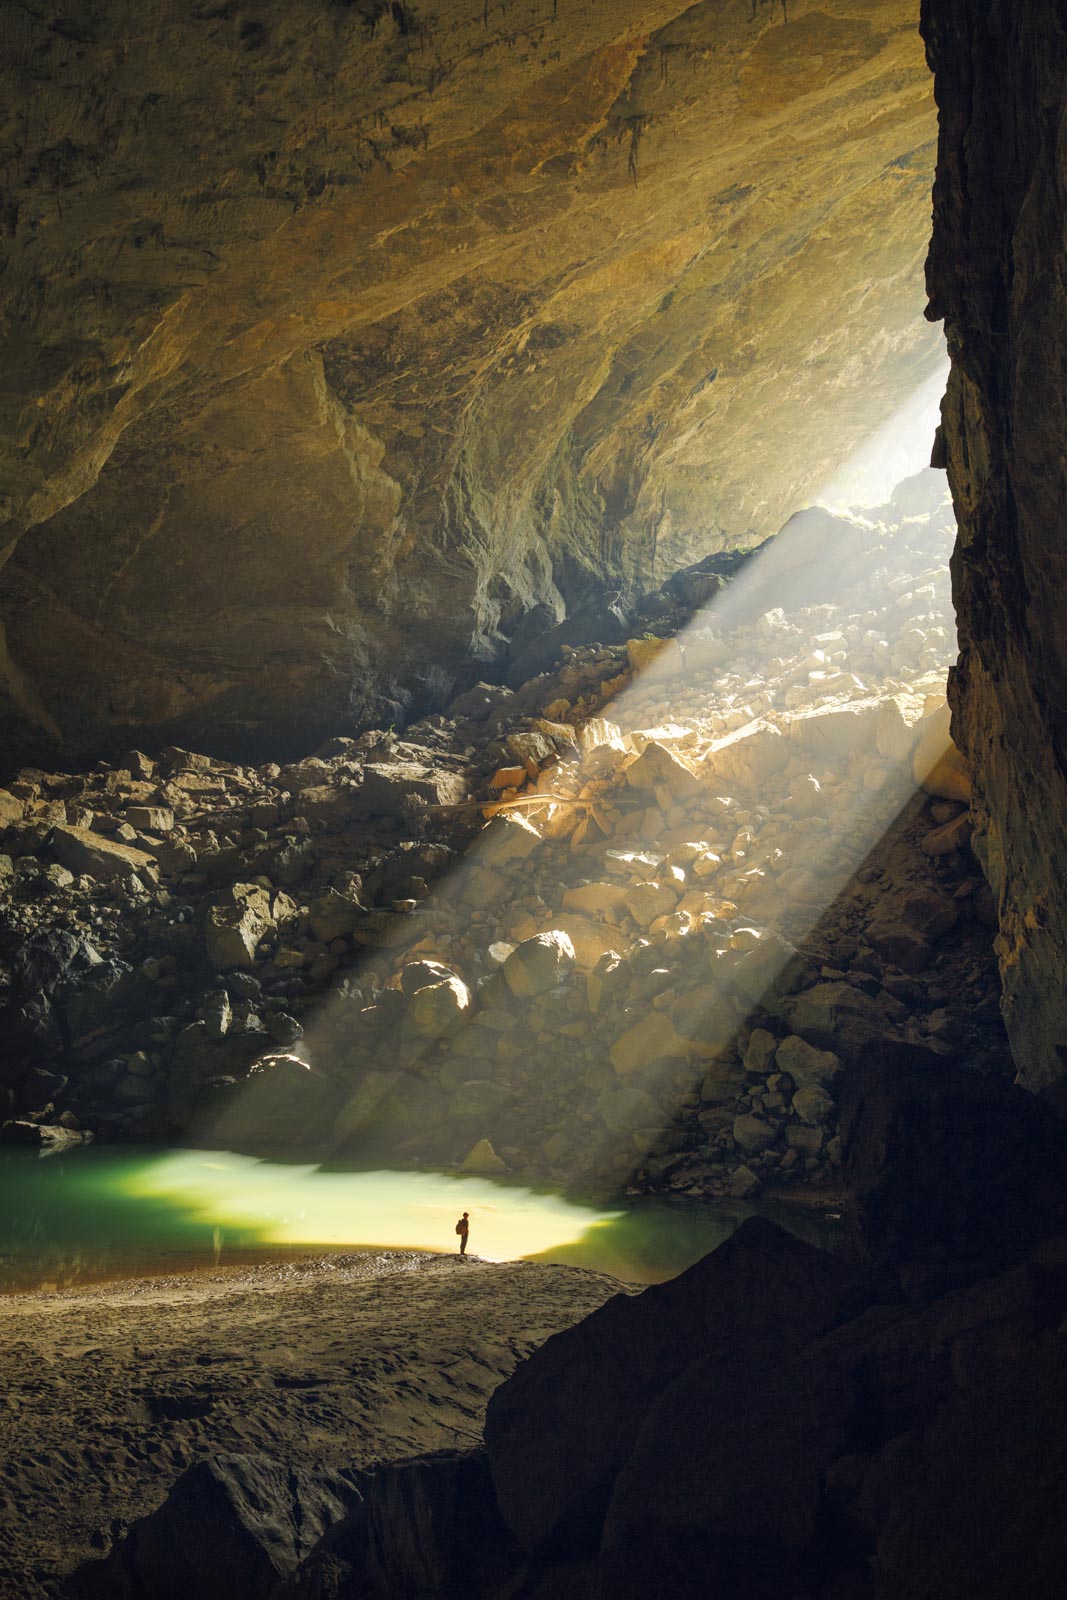 A caver illuminated by a sunbeam in Hang En Cave, Vietnam.